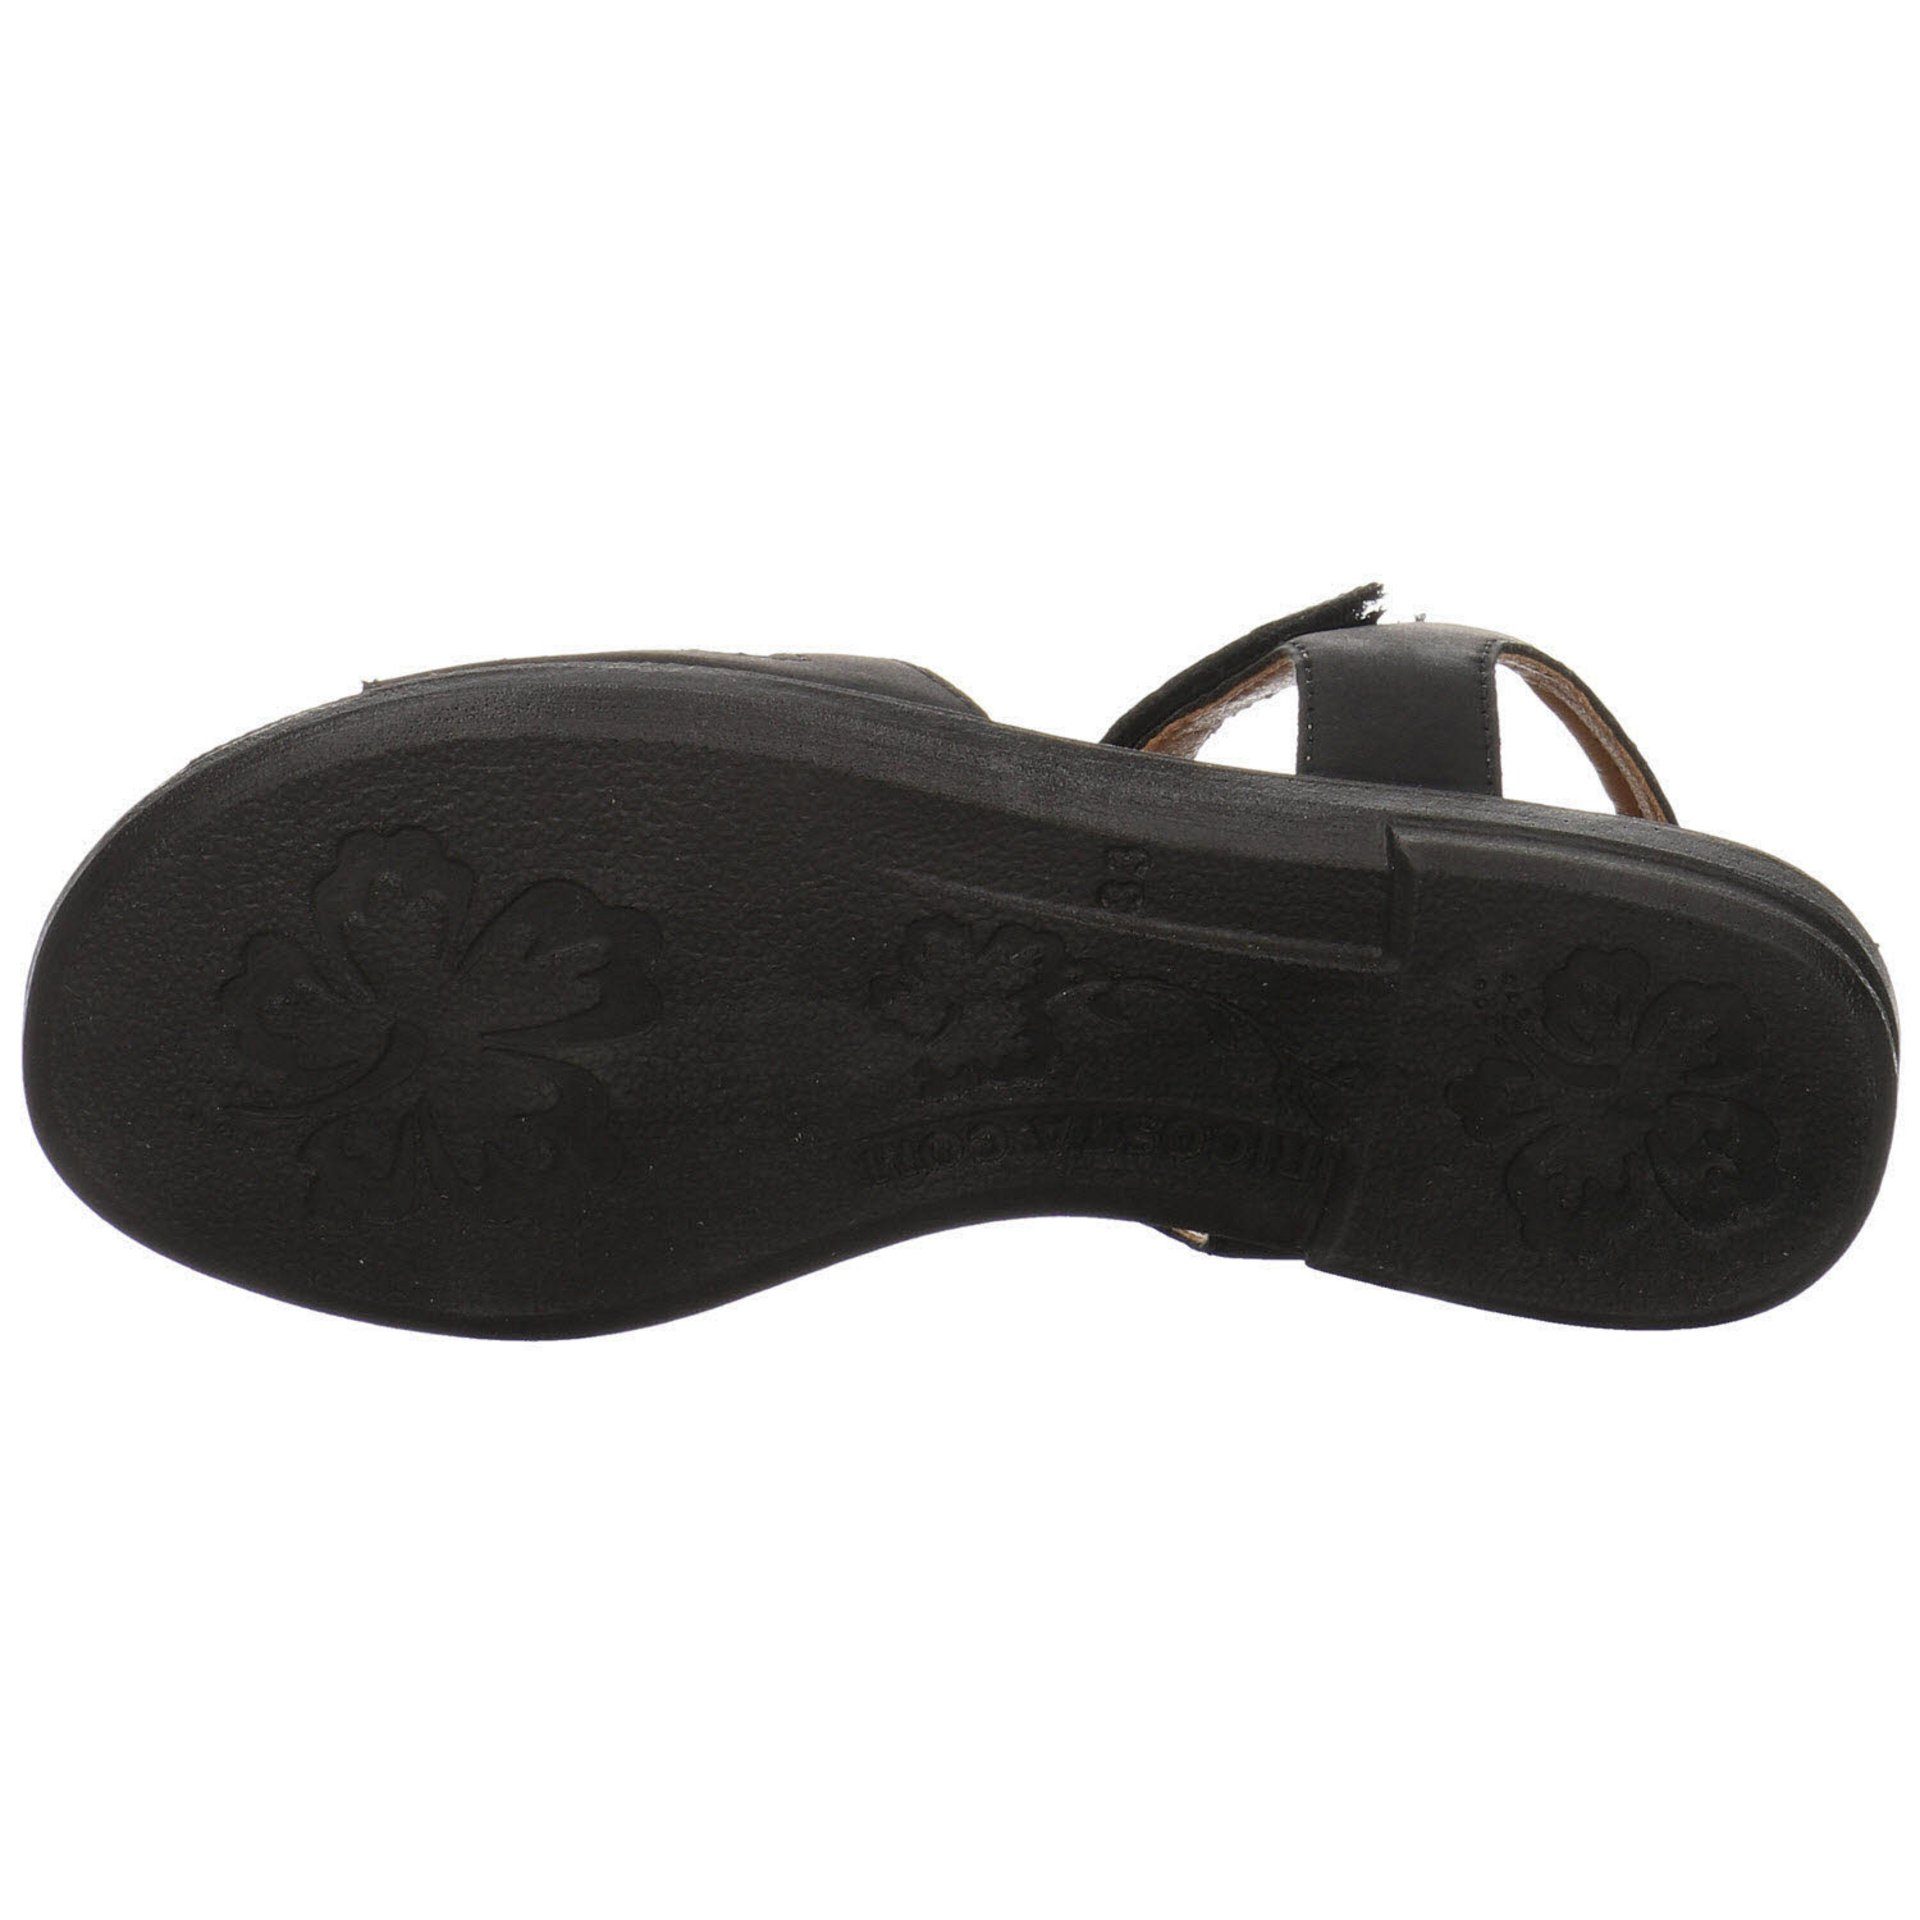 Ricosta Synthetik Sandale Schuhe dunkel Amira Kinderschuhe Sandale schwarz Sandalen Mädchen